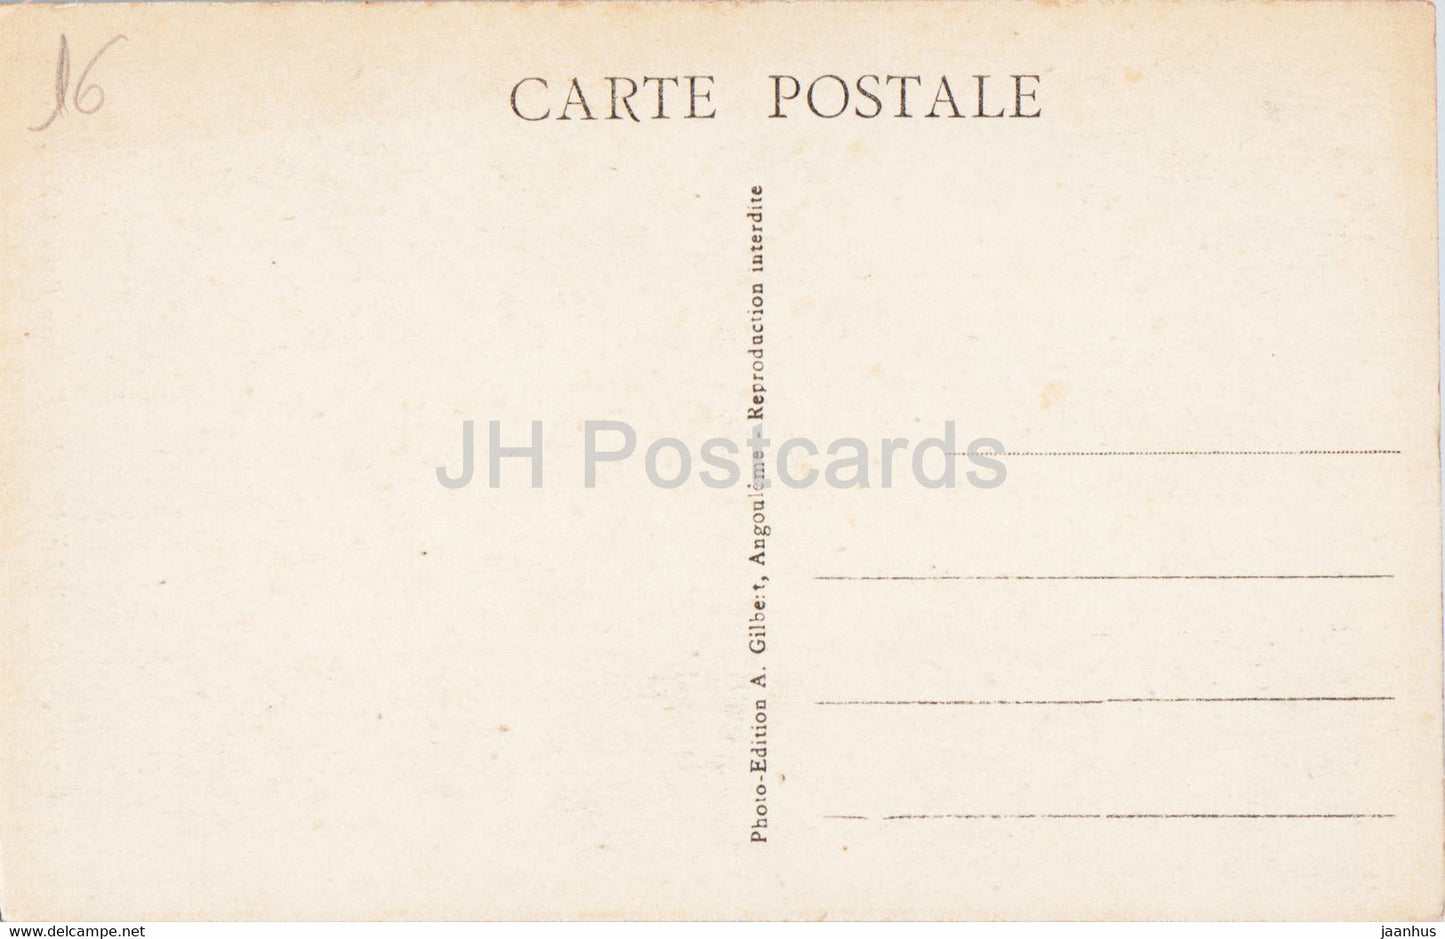 Angouleme - Rue Vauban - 930 - alte Postkarte - Frankreich - unbenutzt